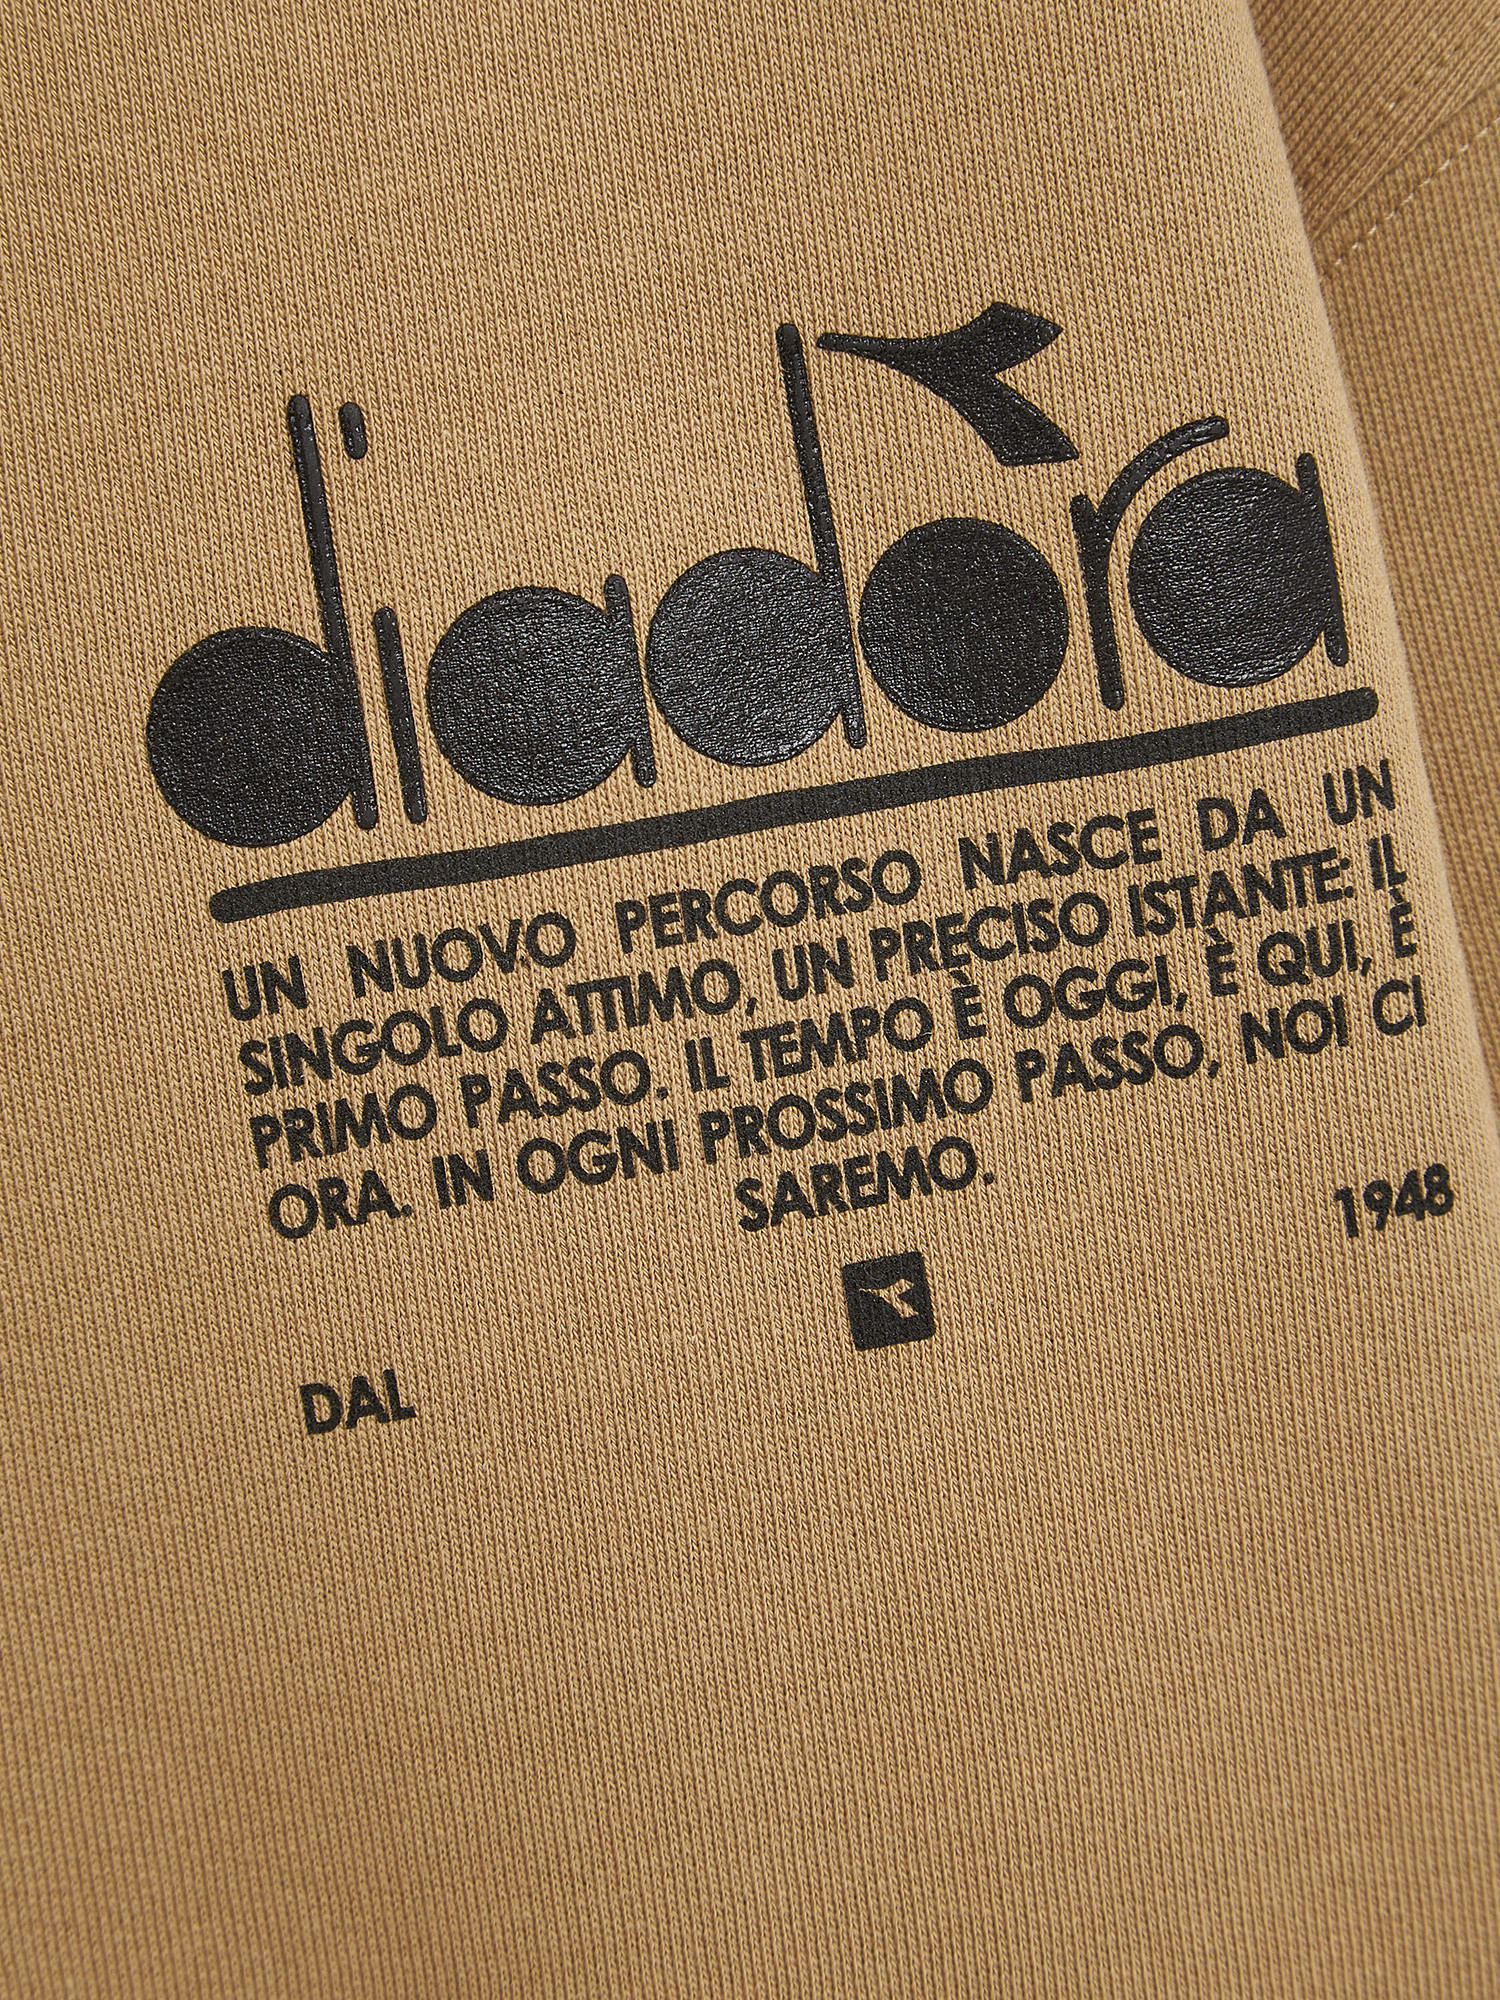 Diadora - Cotton poster crewneck sweatshirt, Beige, large image number 1